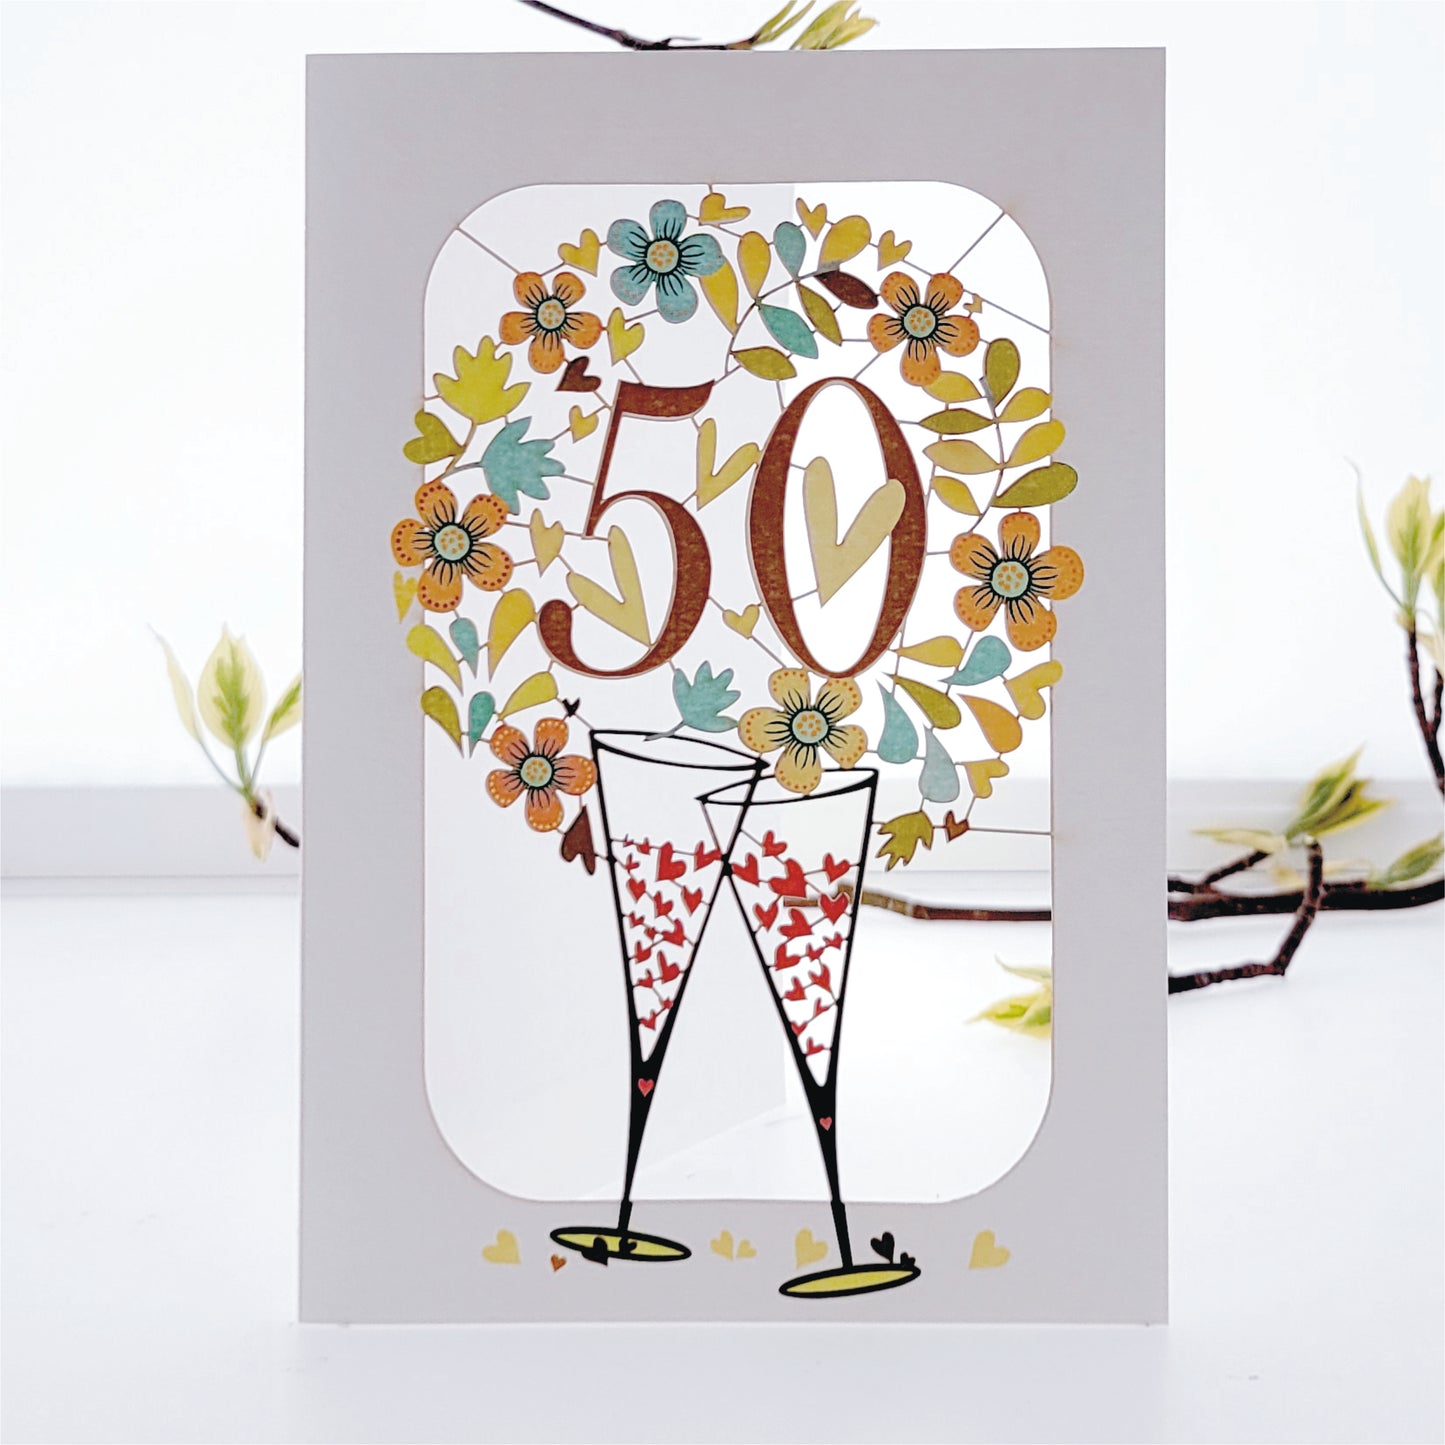 ''50'' - Champagne Glasses - 50th Gold Anniversary Card, #PM-288